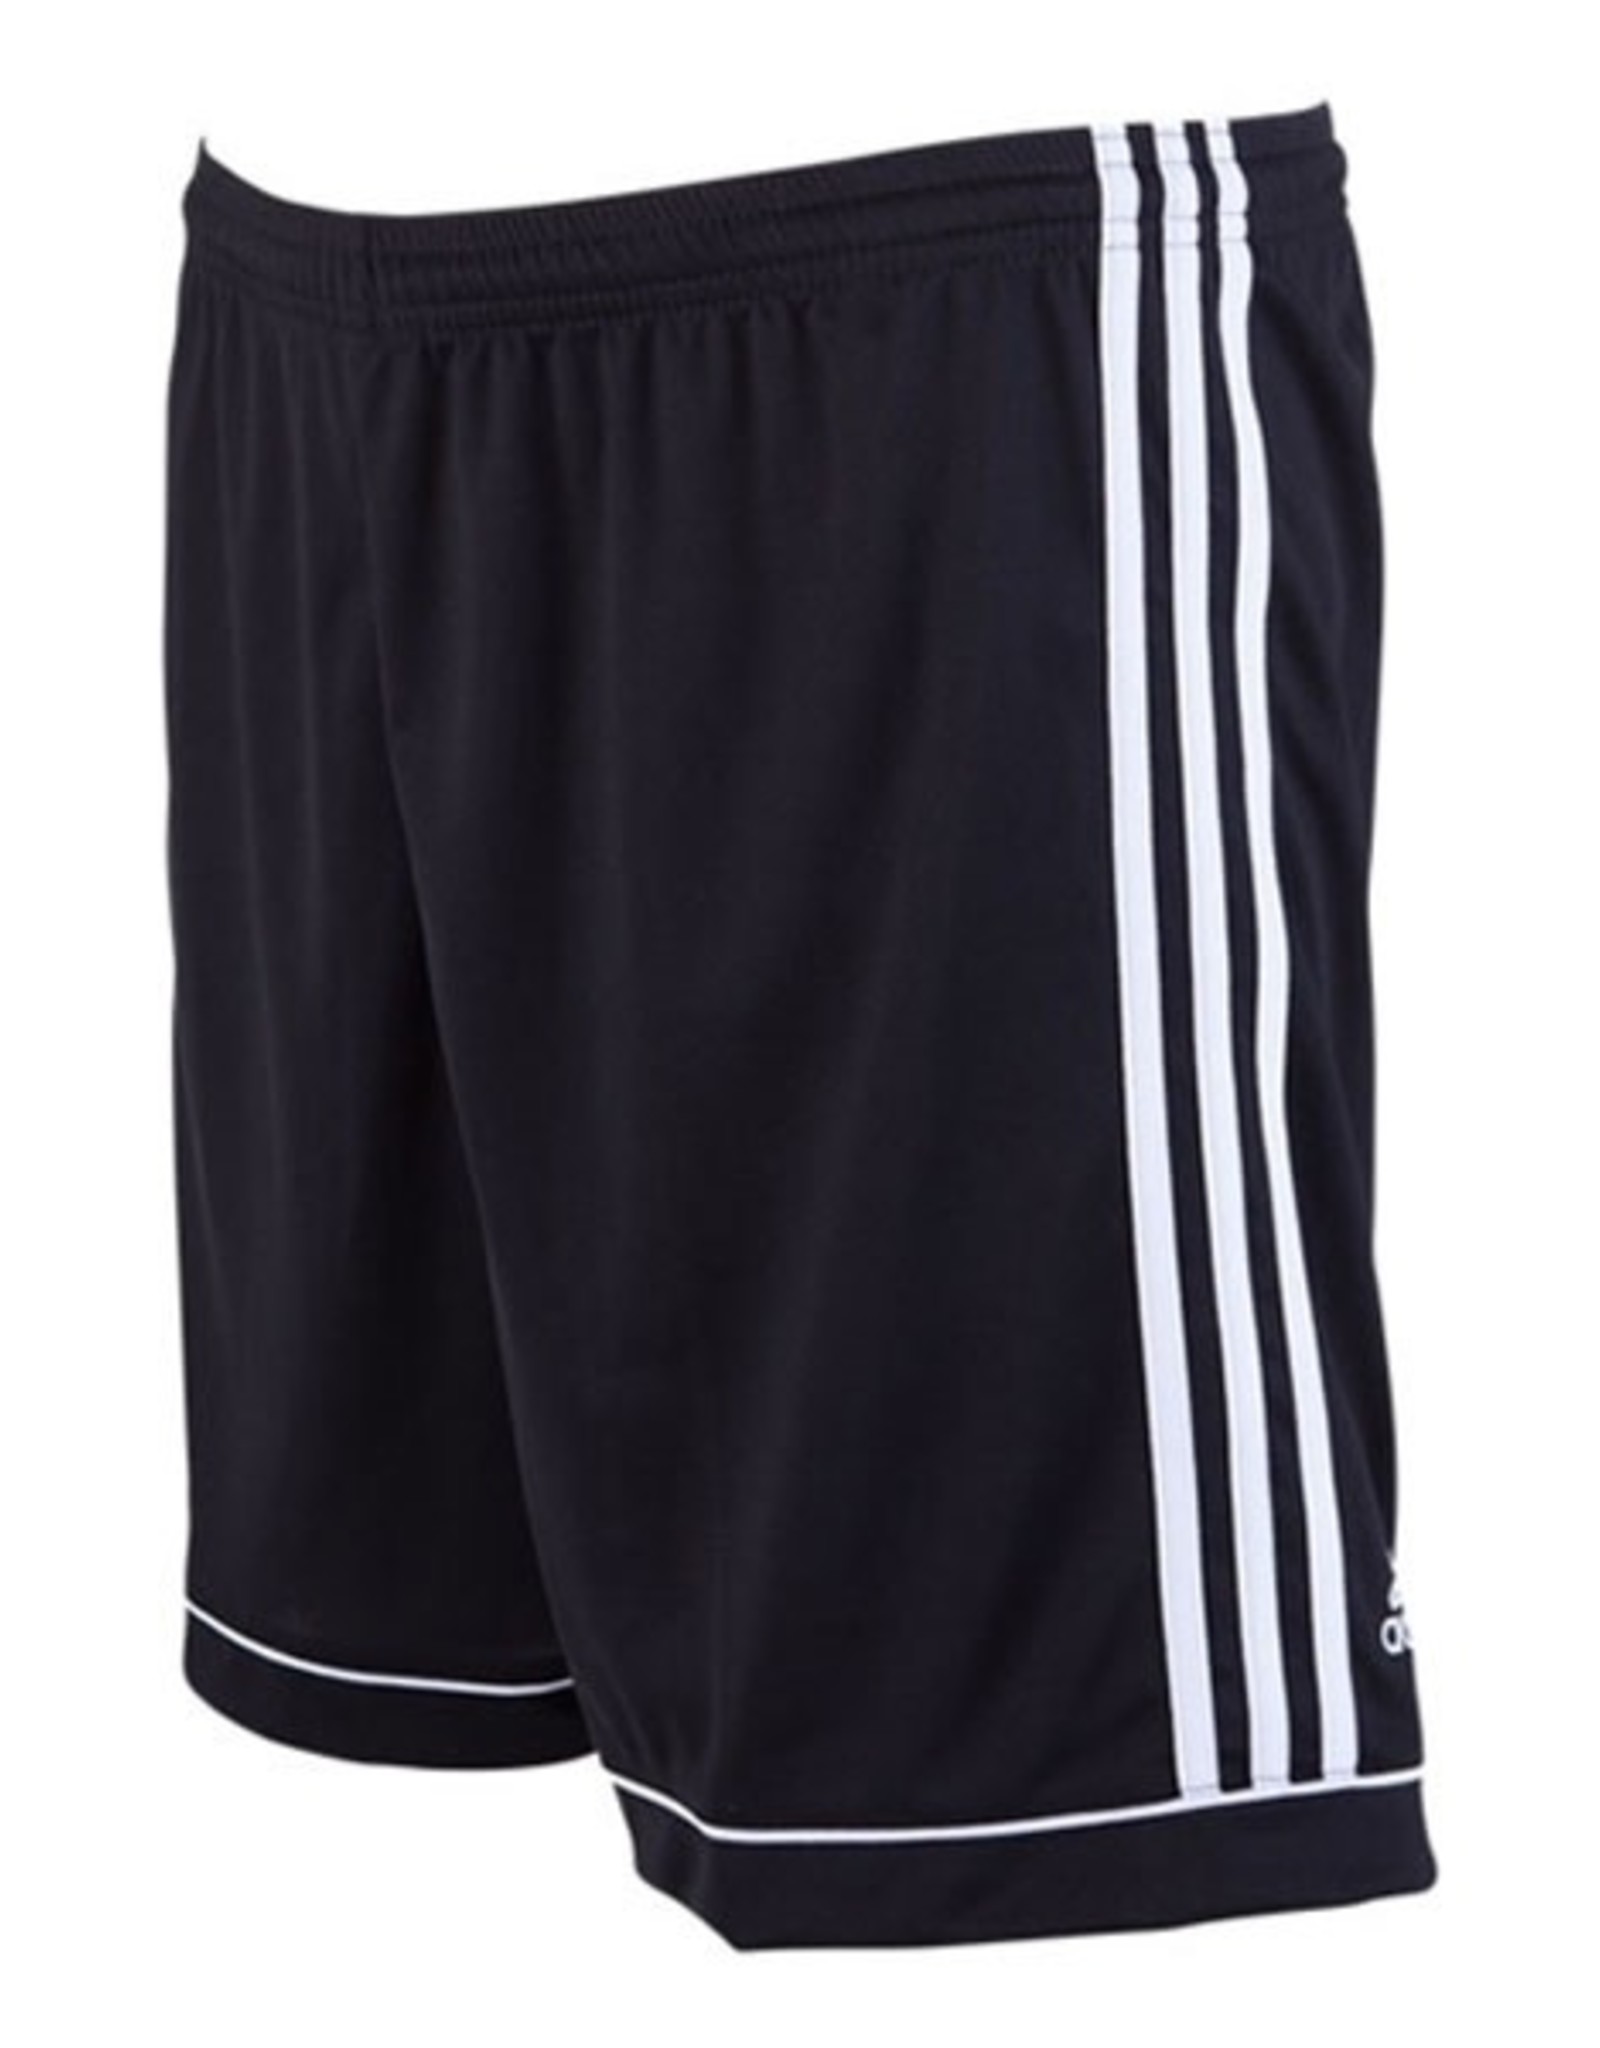 Adidas Adidas Squad 17 Shorts